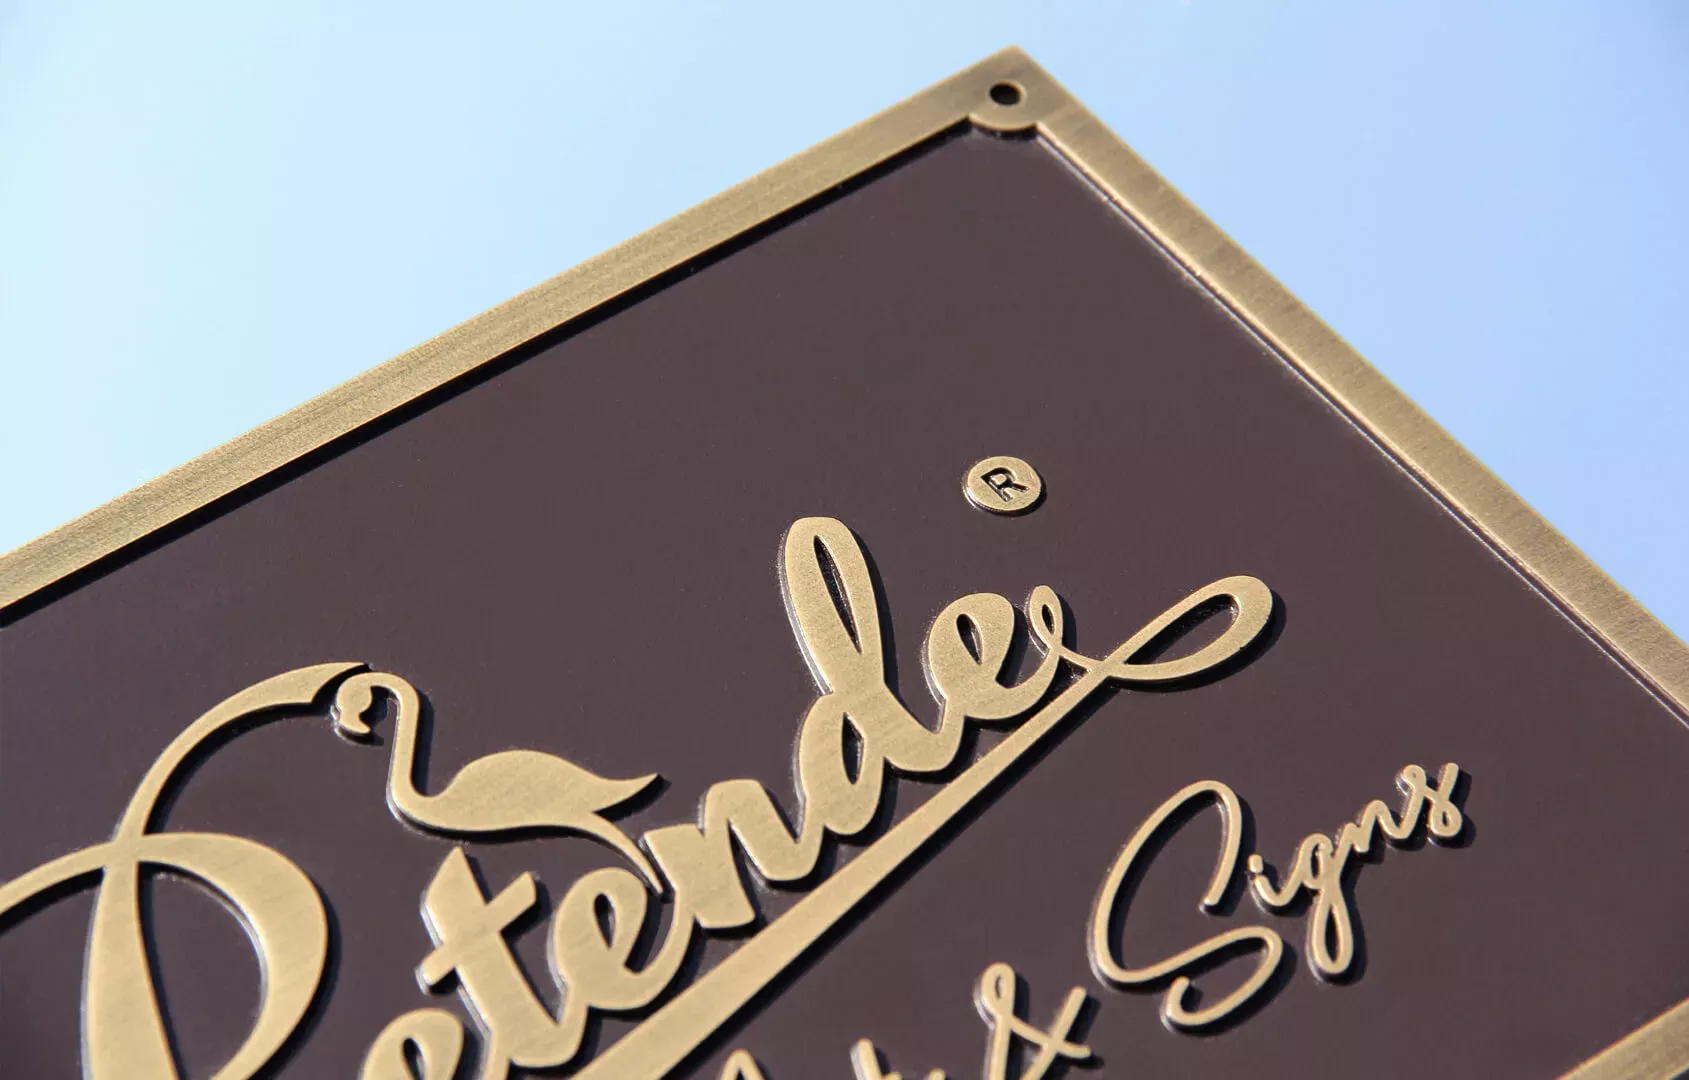 Pretende cast plaque - 3D cast bronze plaque with Pretende logo